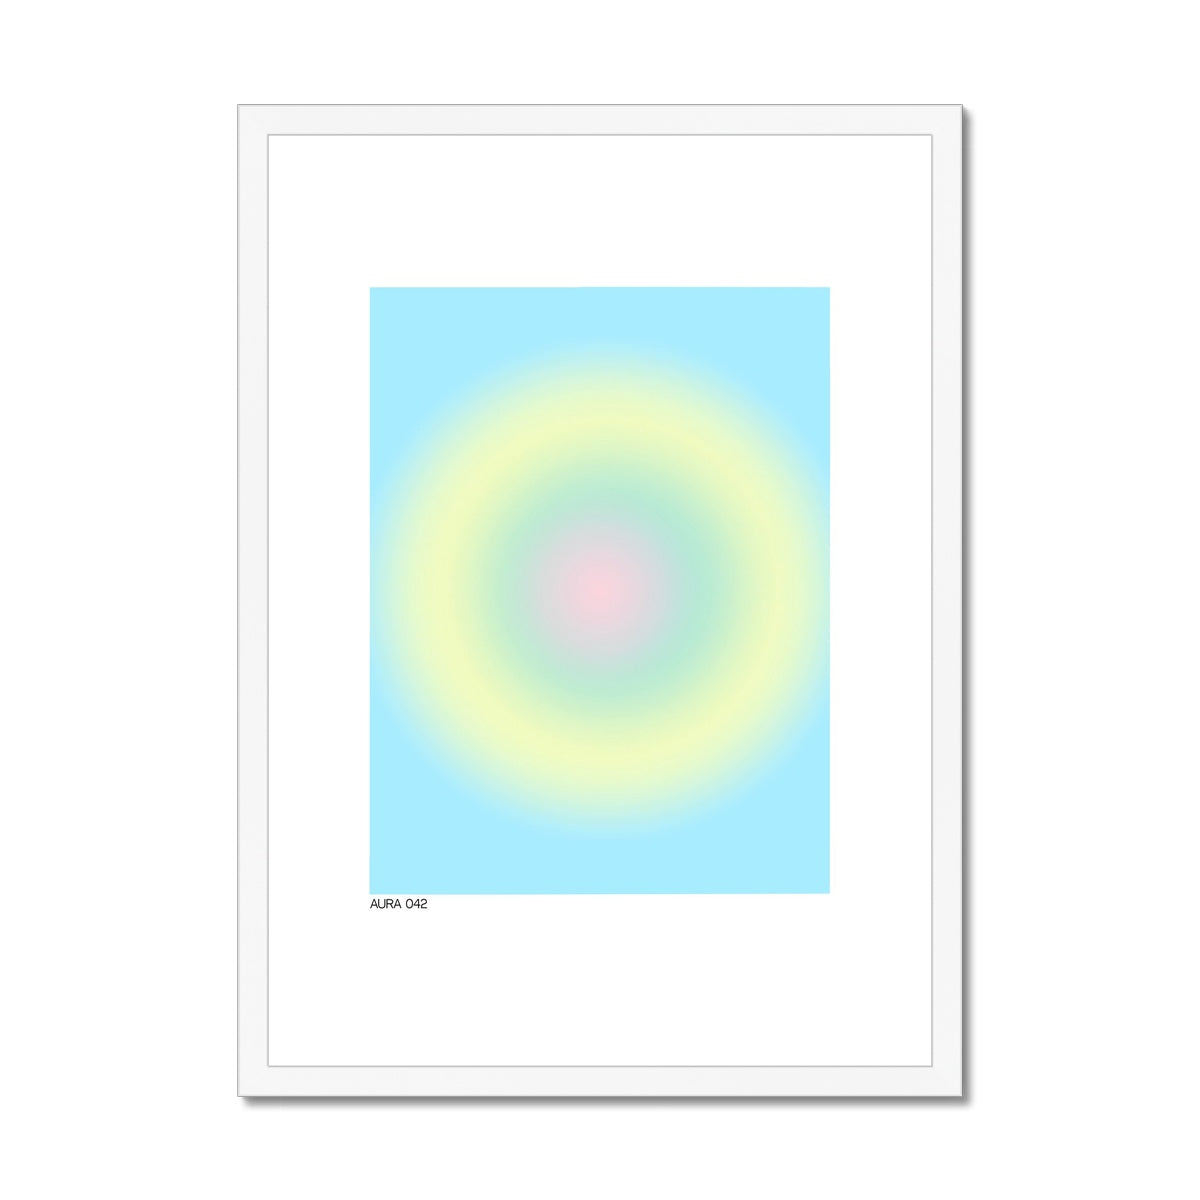 aura 042 Framed & Mounted Print